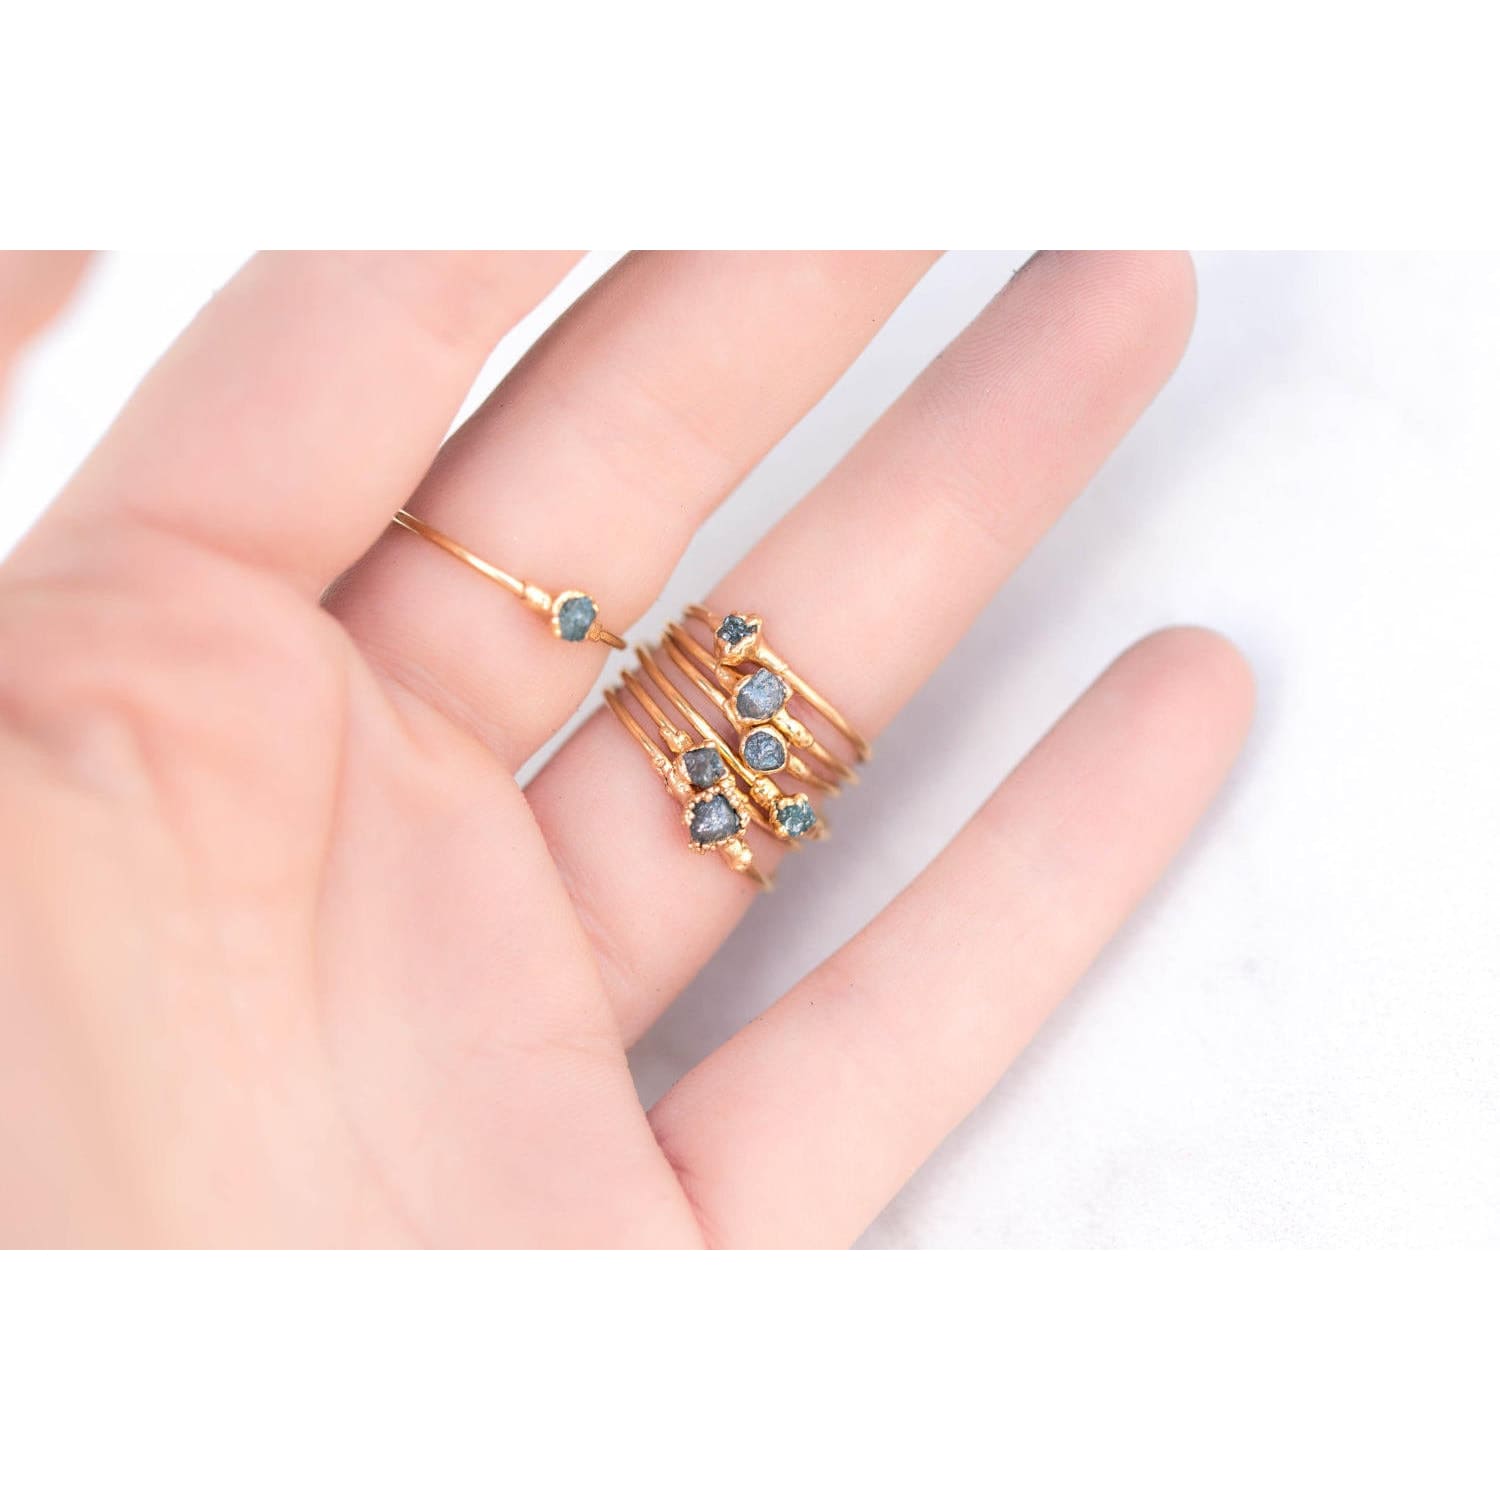 Raw Blue Diamond Ring Gemstone Jewelry Rough Crystal Stone